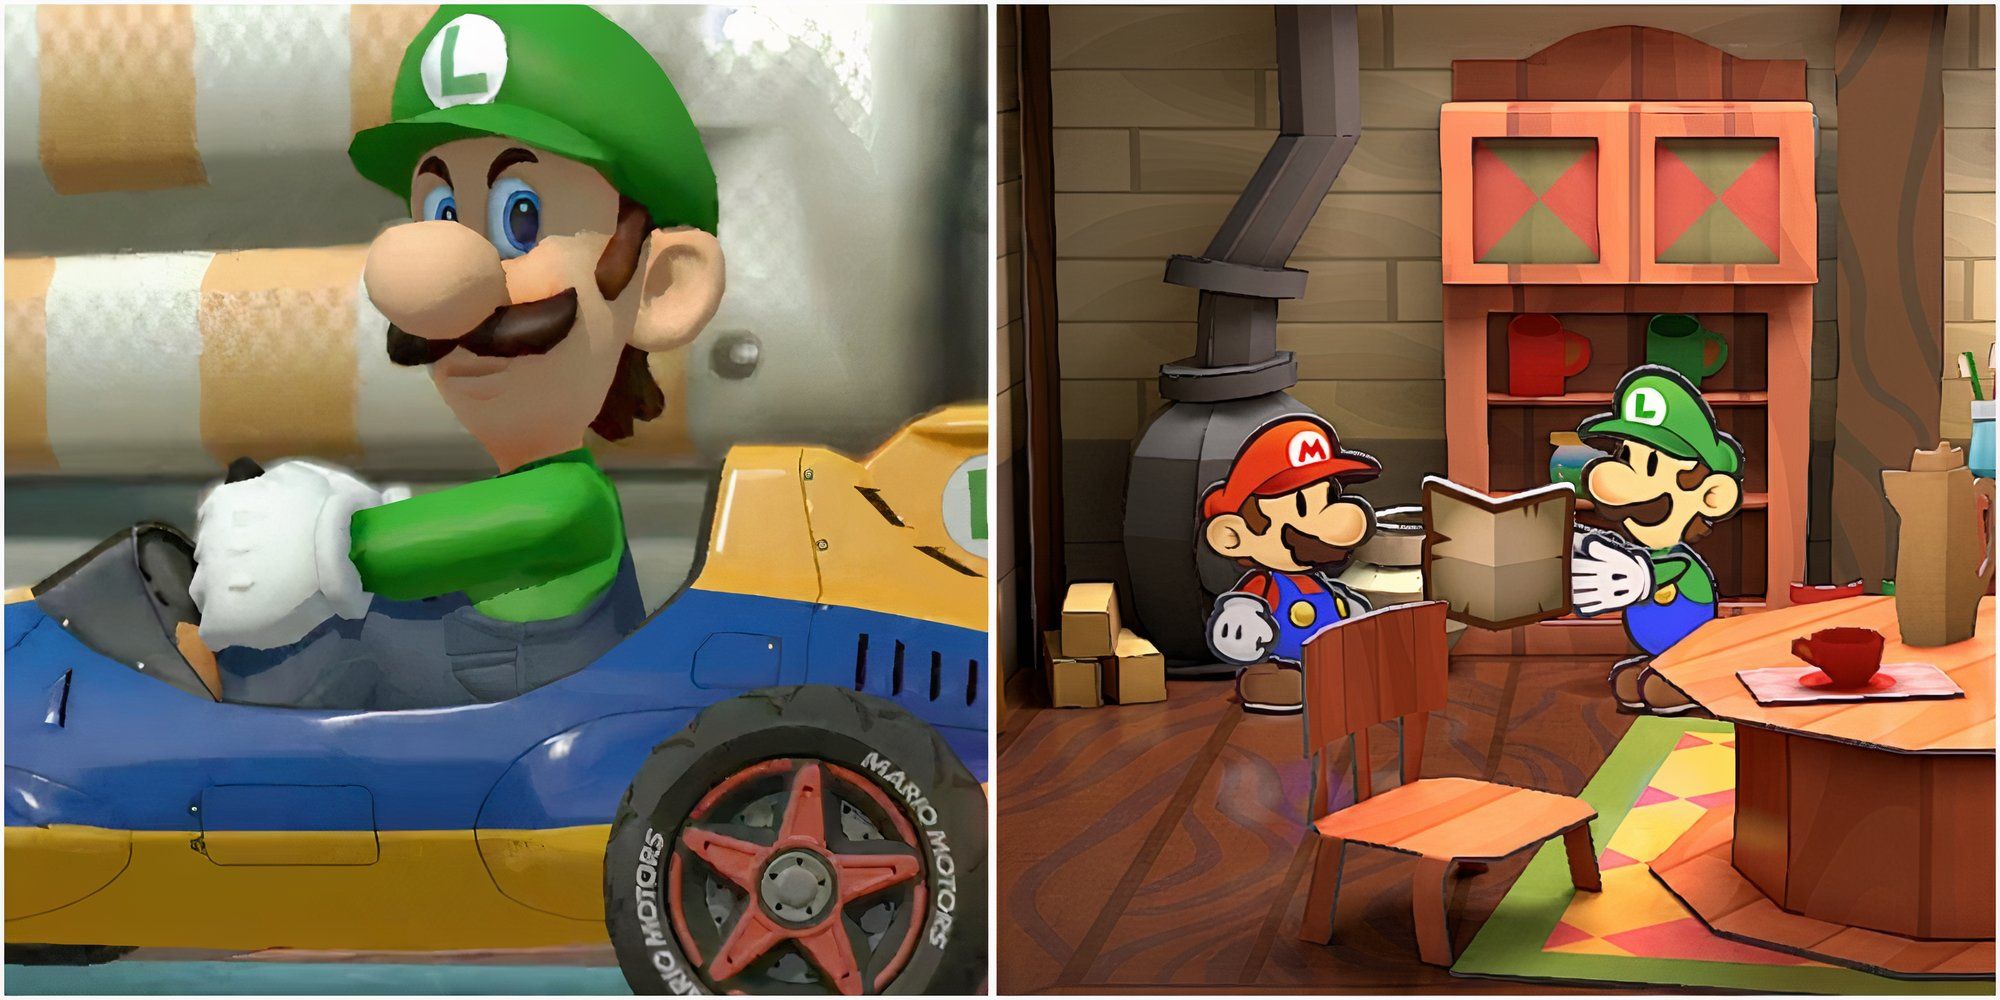 Luigi in Mario Kart 8 and Mario talking to Luigi in Paper Mario The Thousand-Year Door